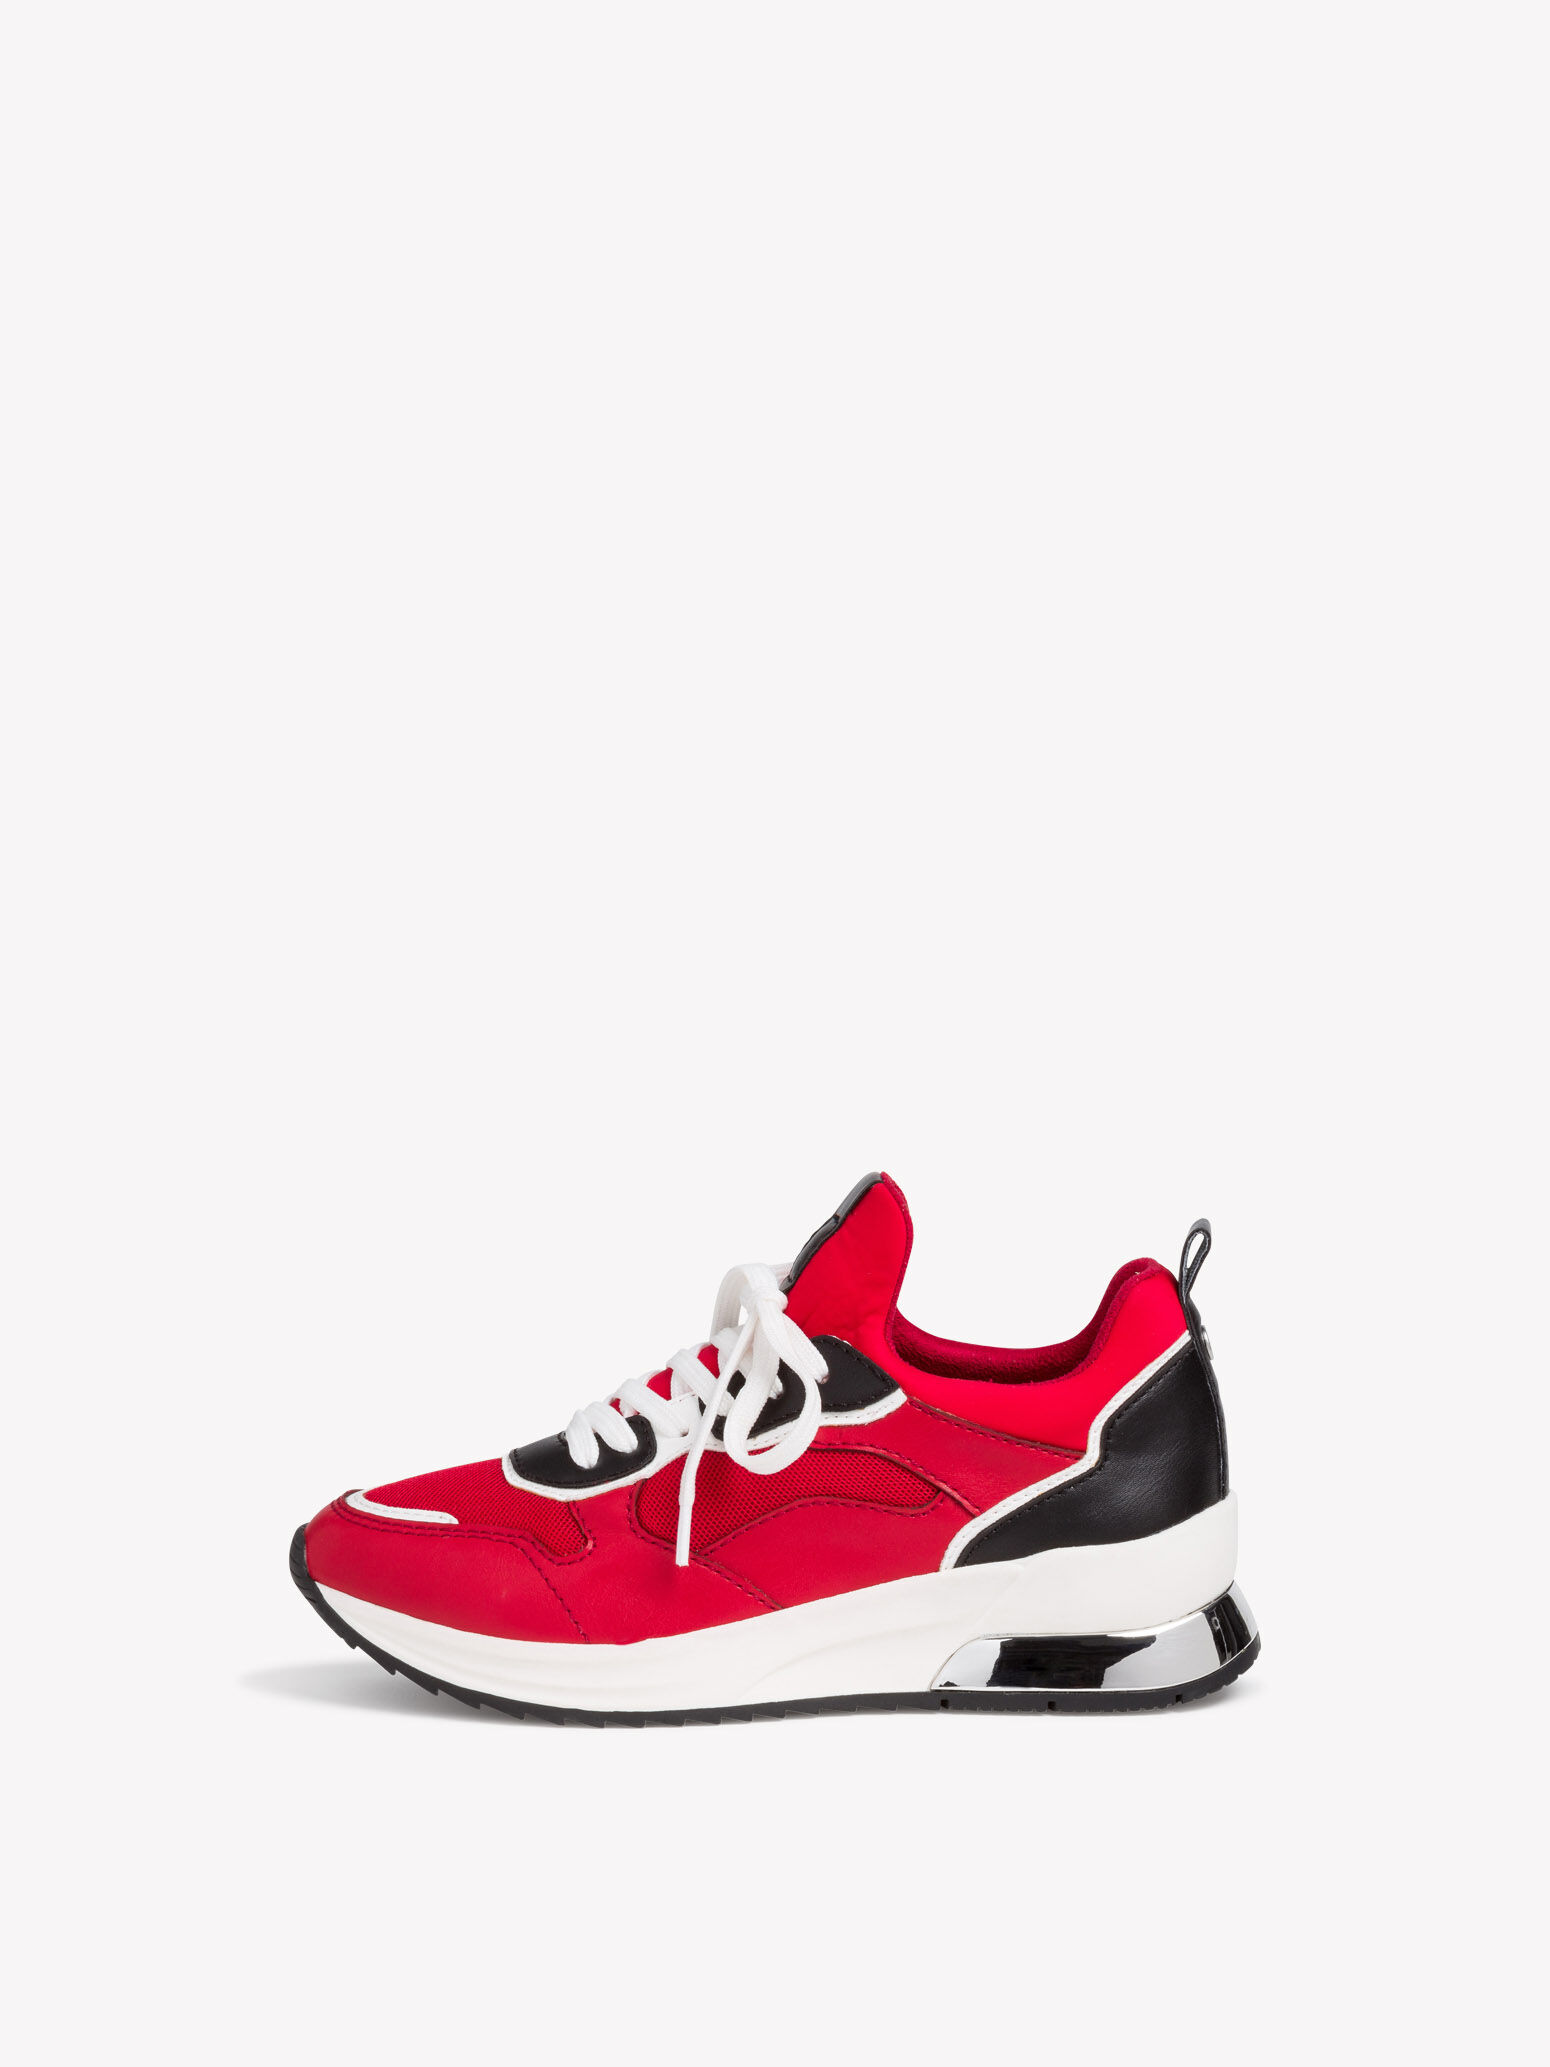 red sneakers online